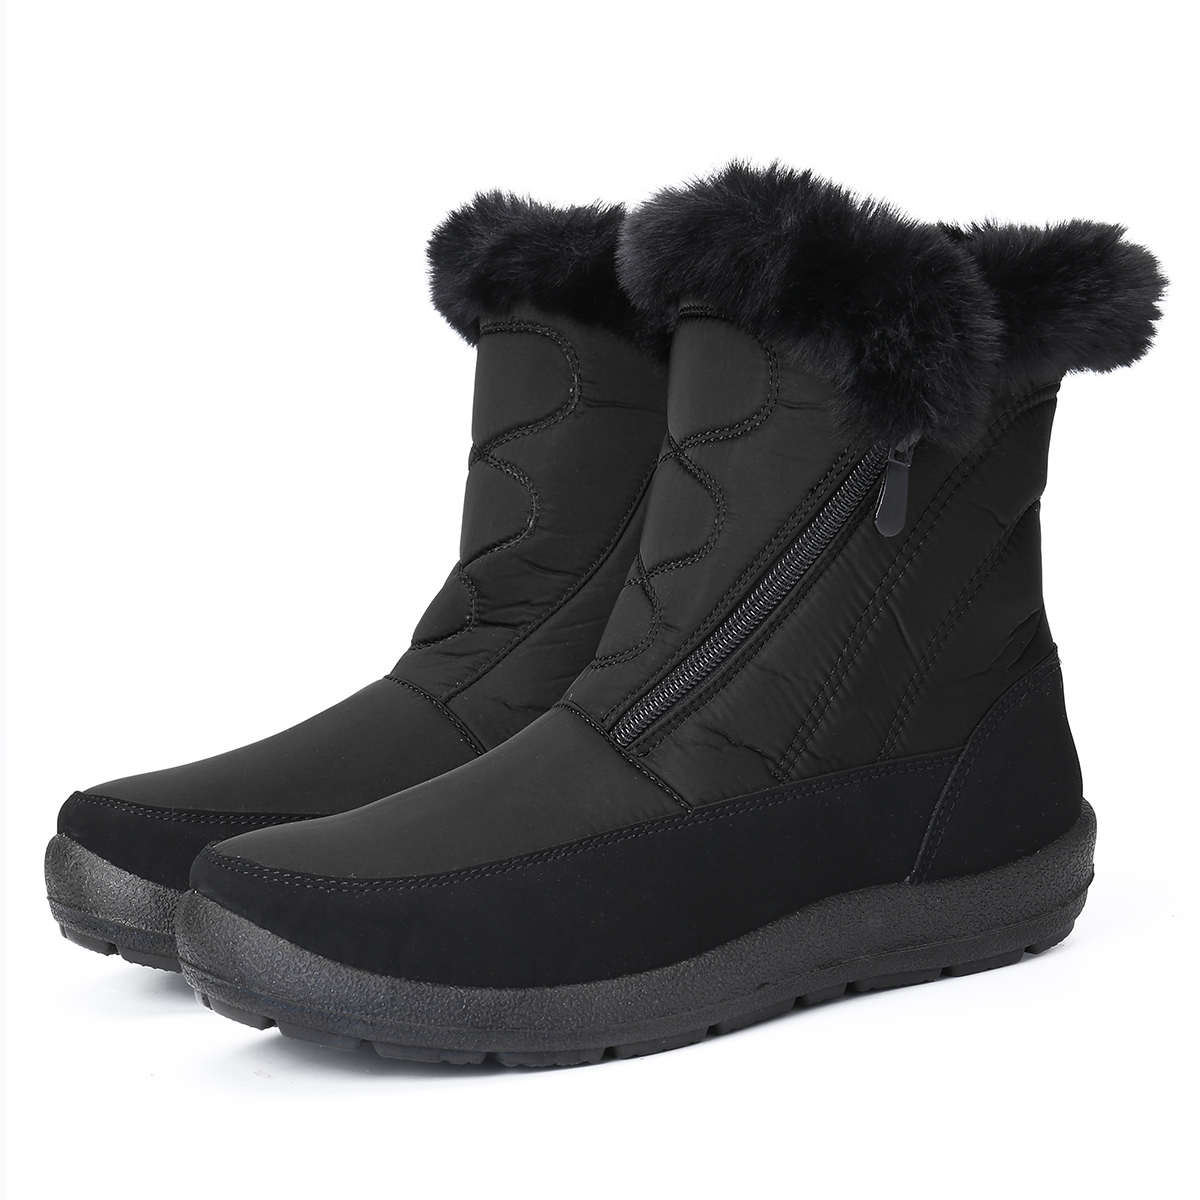 gracosy Waterproof Snow Boots for Women, Fur Lined Winter Warm Flat ...